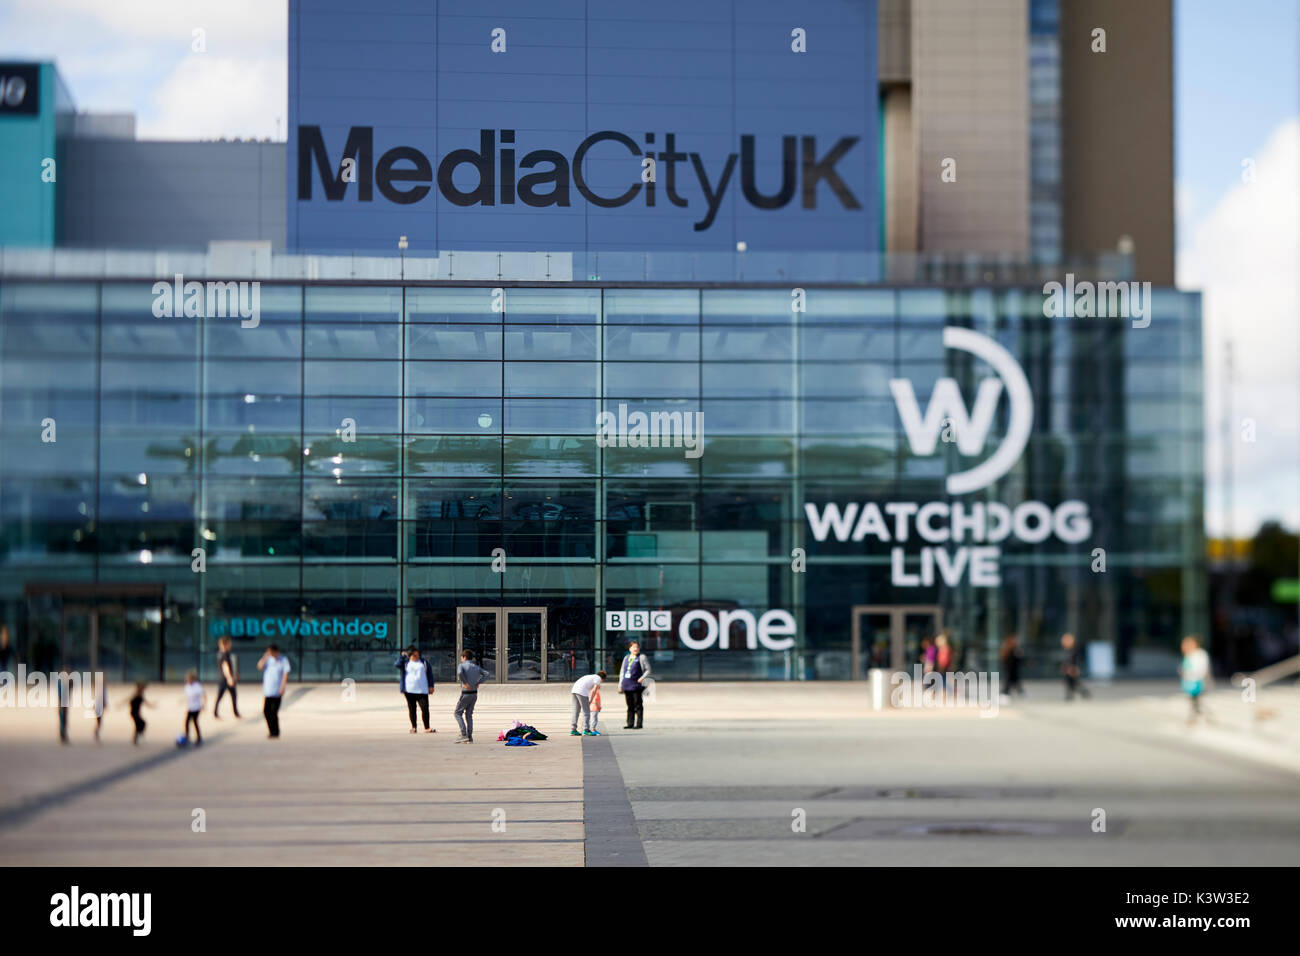 Regeneration docks at MediaCityUk at Salford Quays Gtr Manchester, Dock 10 studios with BBC Watchdog branding Stock Photo